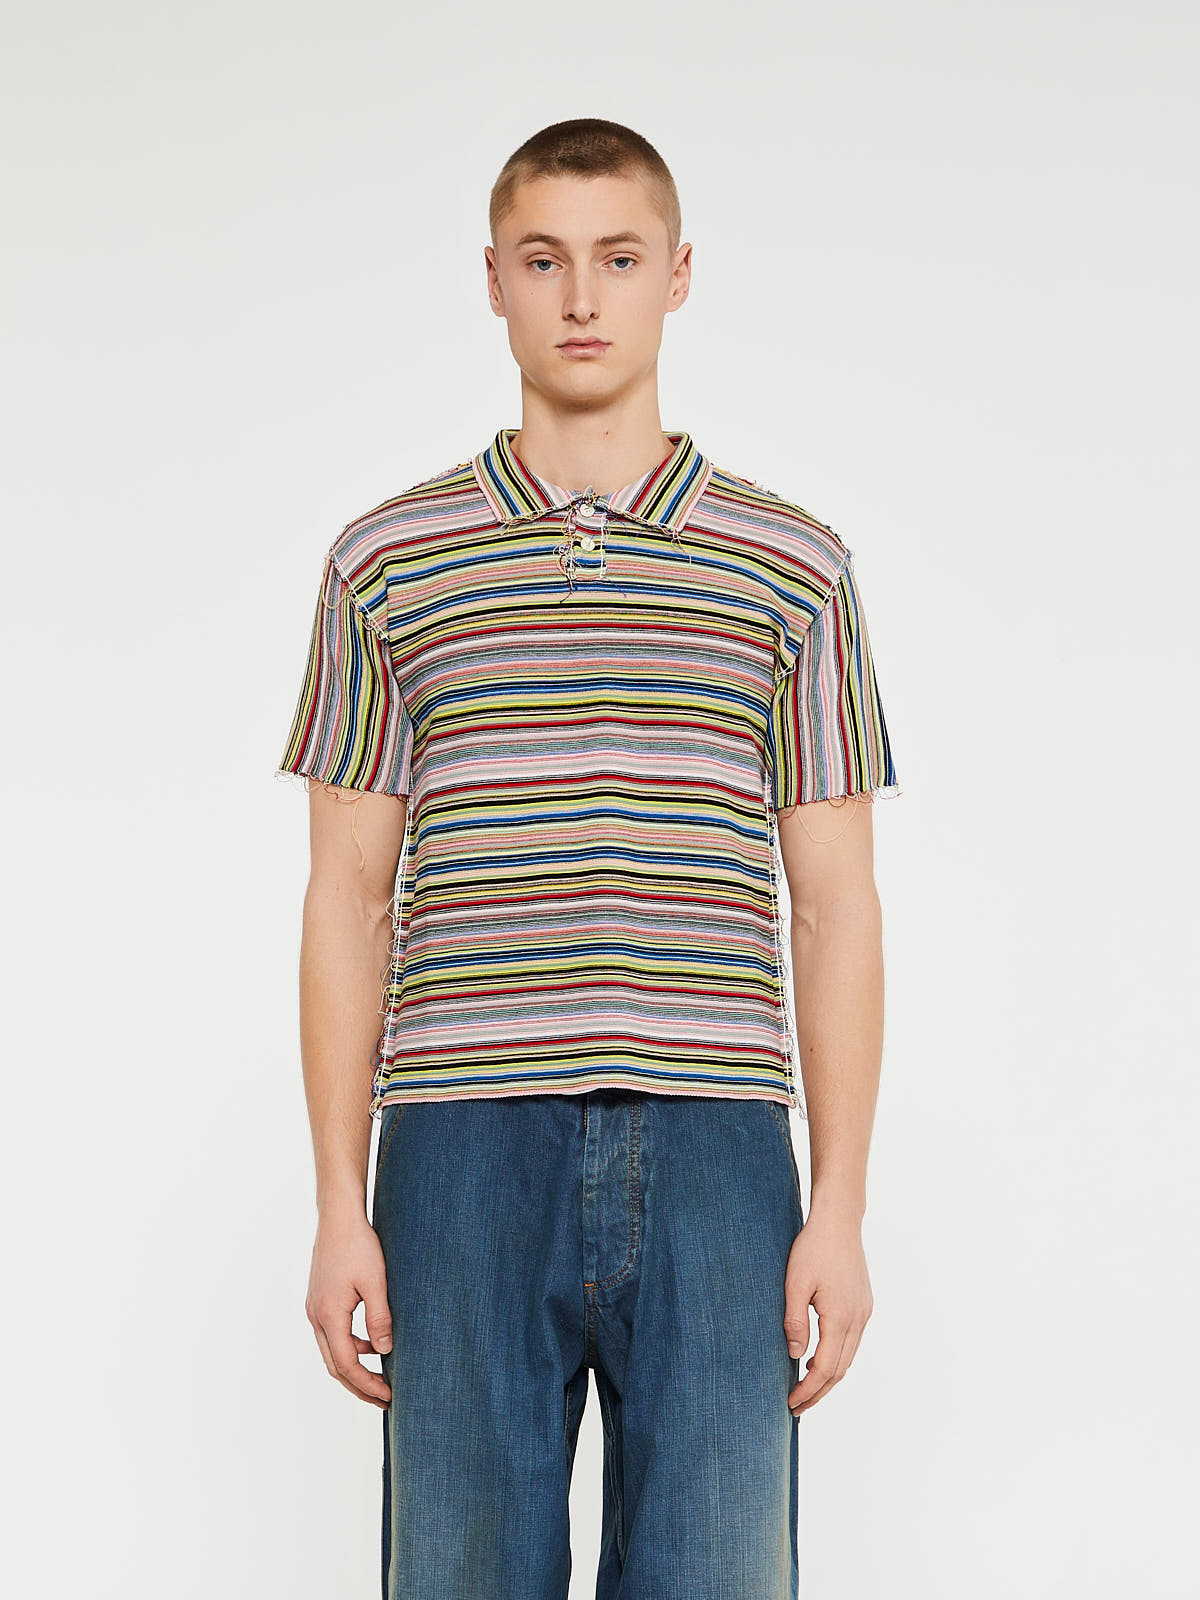 Maison Margiela - Knit Polo Shirt in Stripes